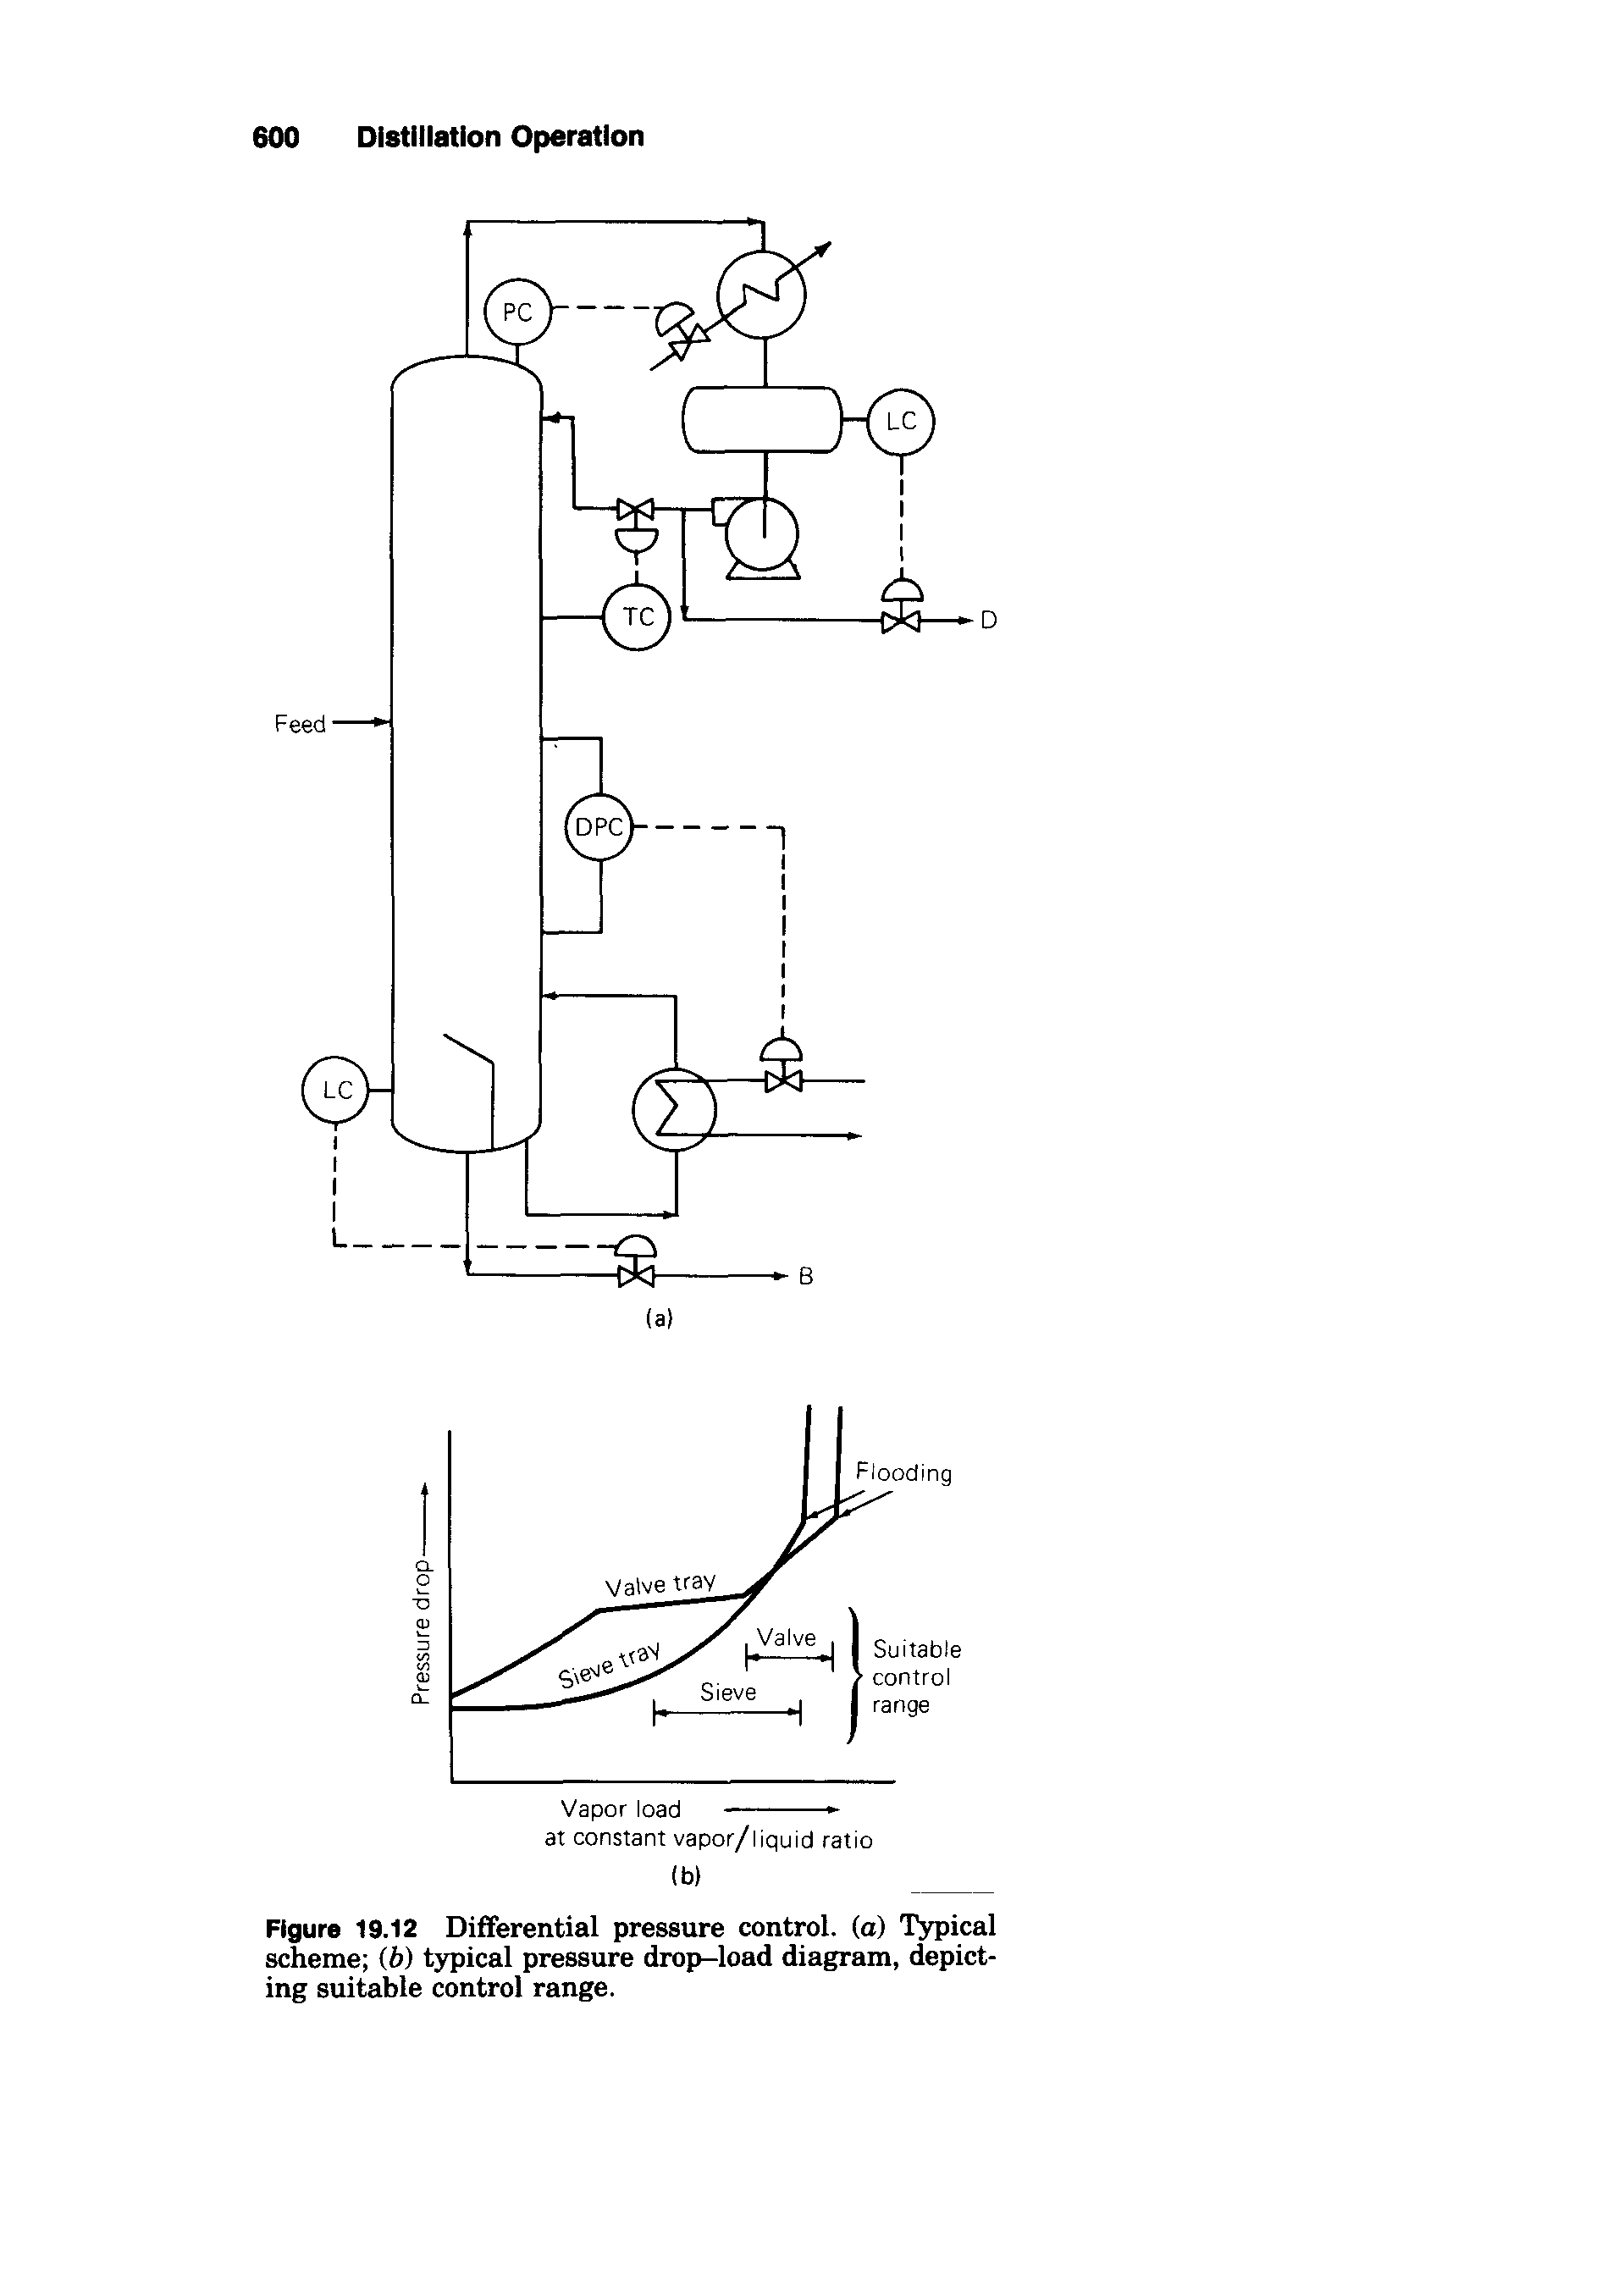 Figure 19.12 Differential pressure control, (a) T5rpical scheme (b) typical pressure drop-load diagram, depicting suitable control range.